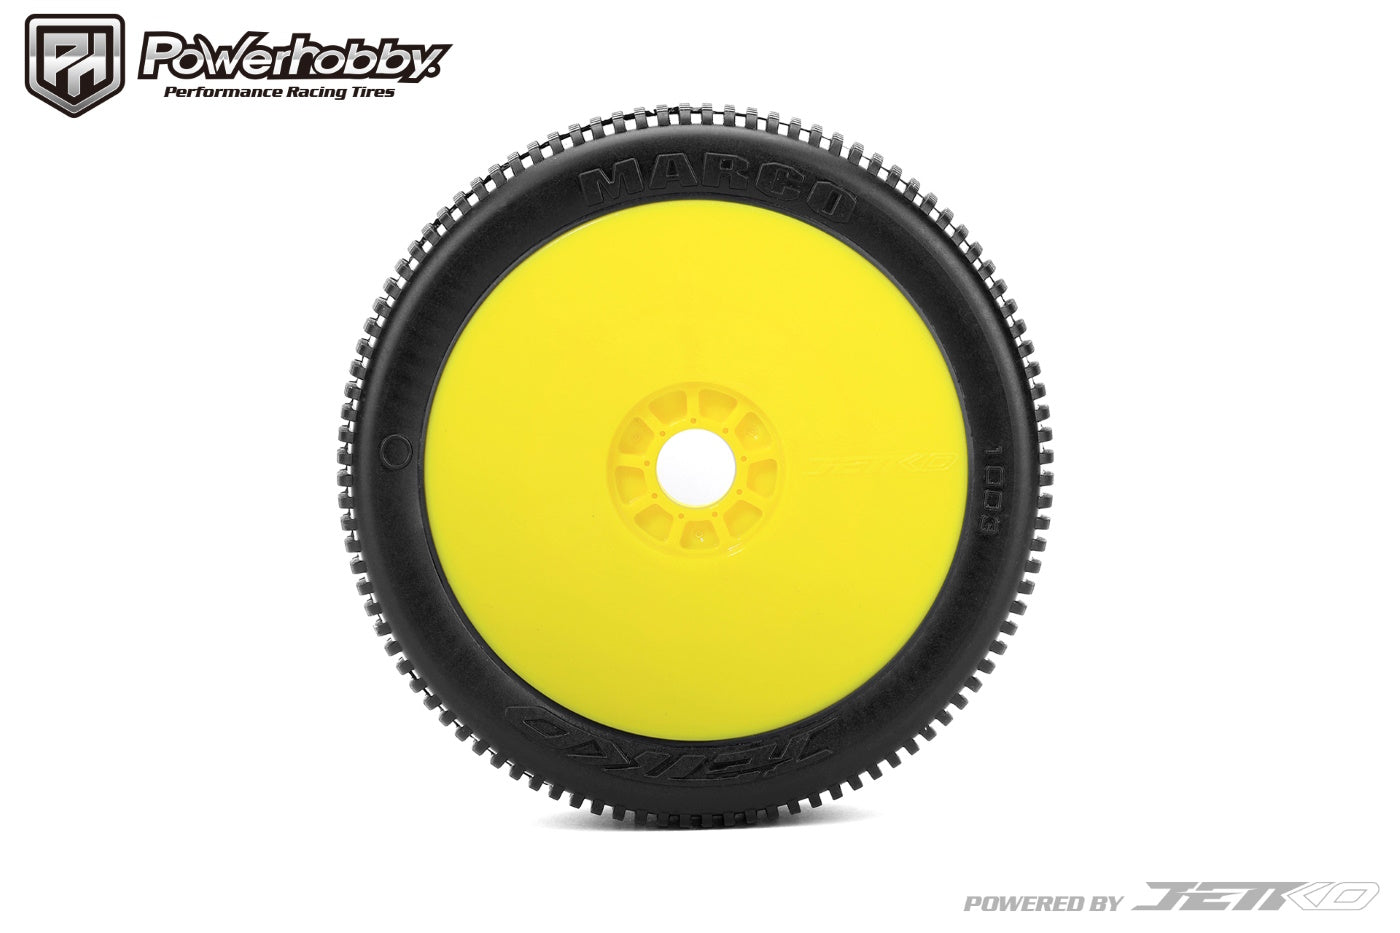 Powerhobby Marco 1/8 Buggy Mounted Tires Yellow Dish Wheels (2) Super Soft - PowerHobby